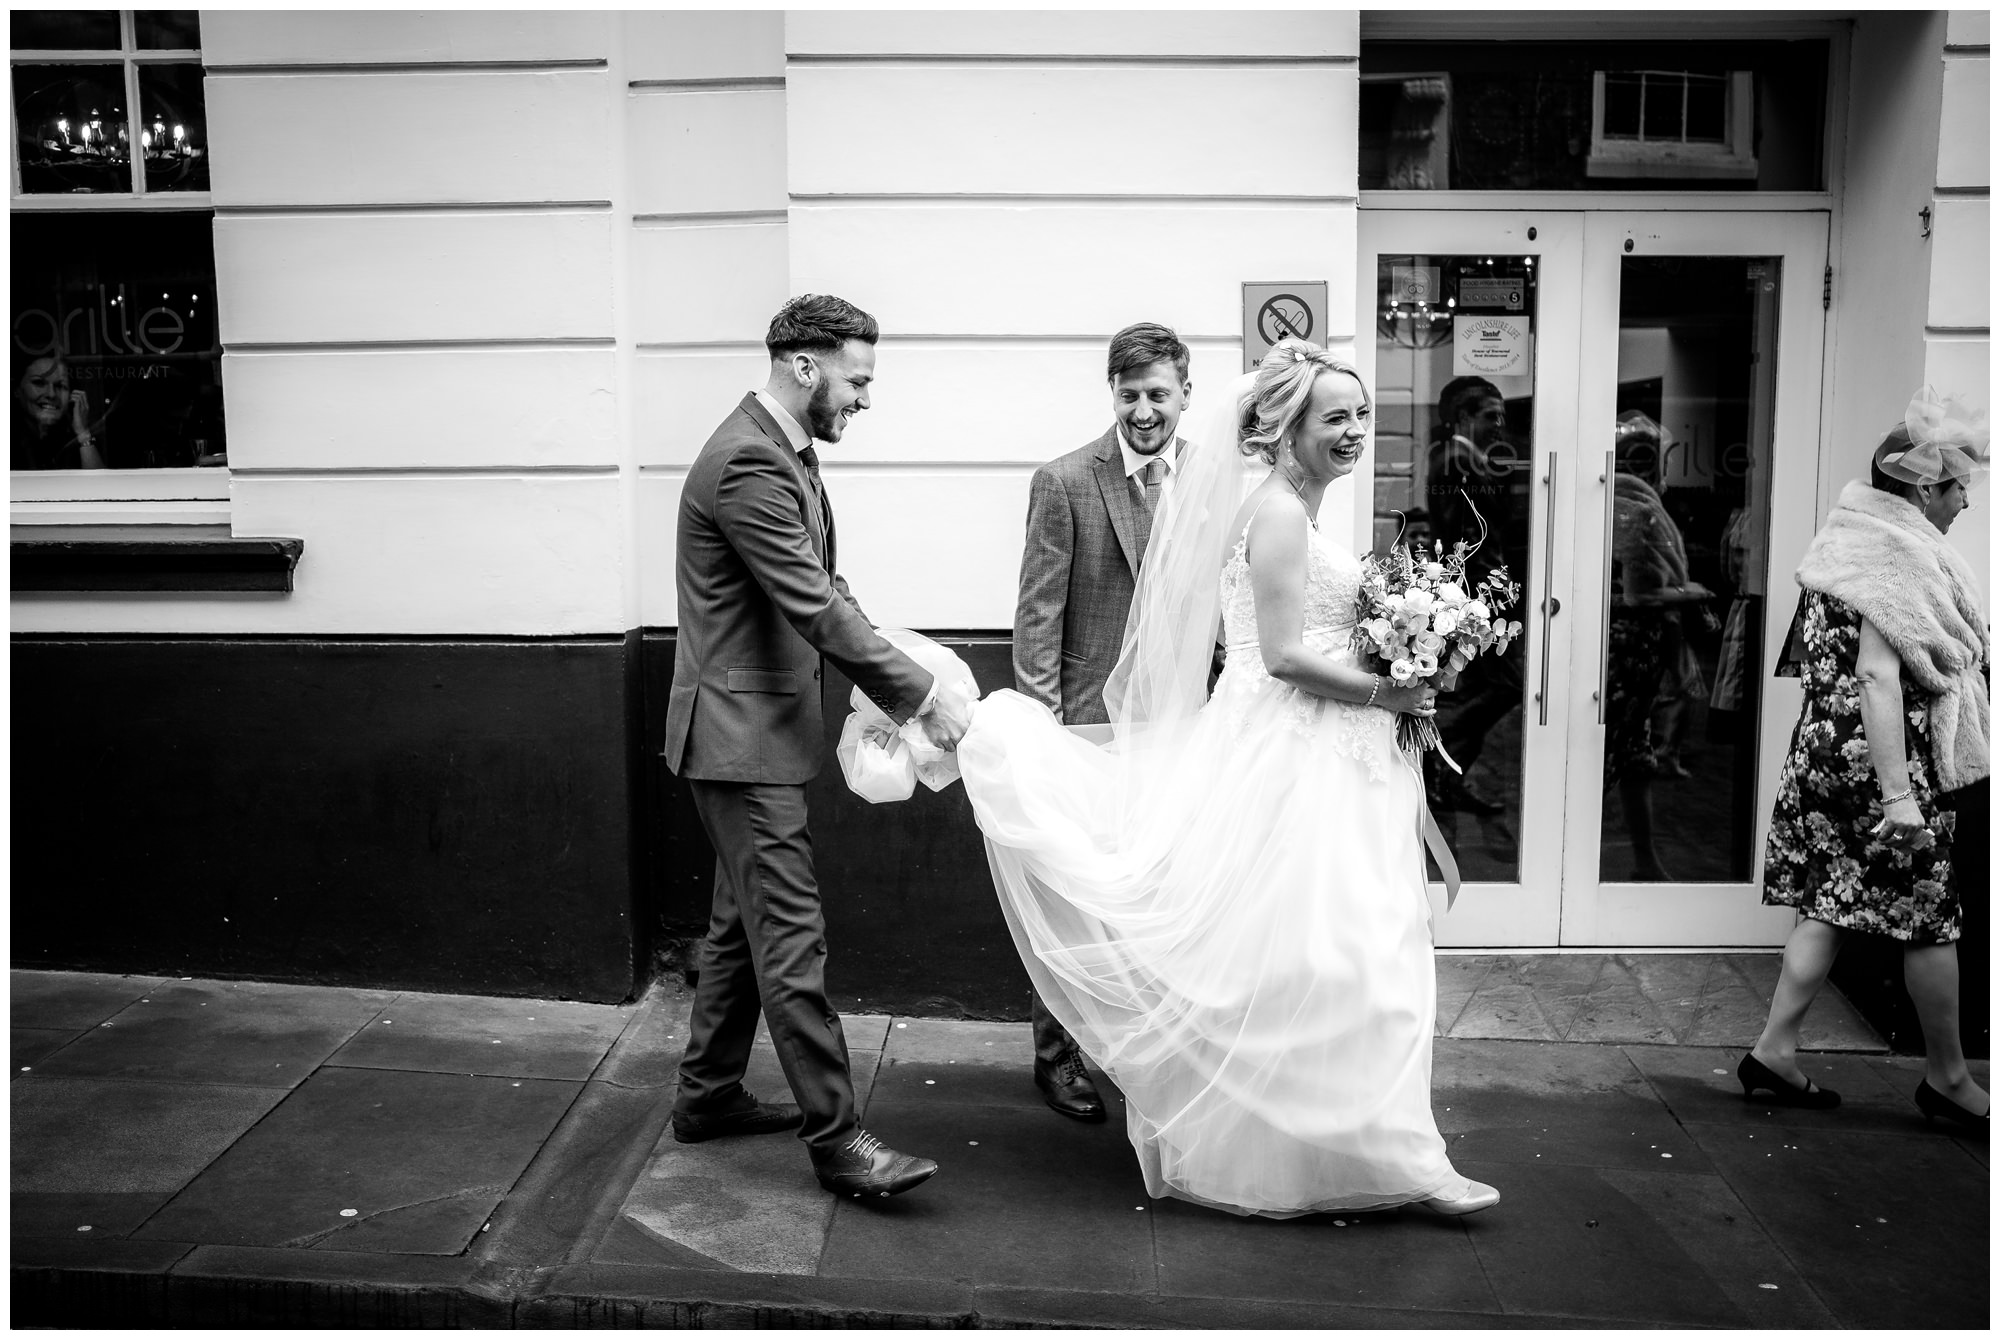 wedding guest carrying dress